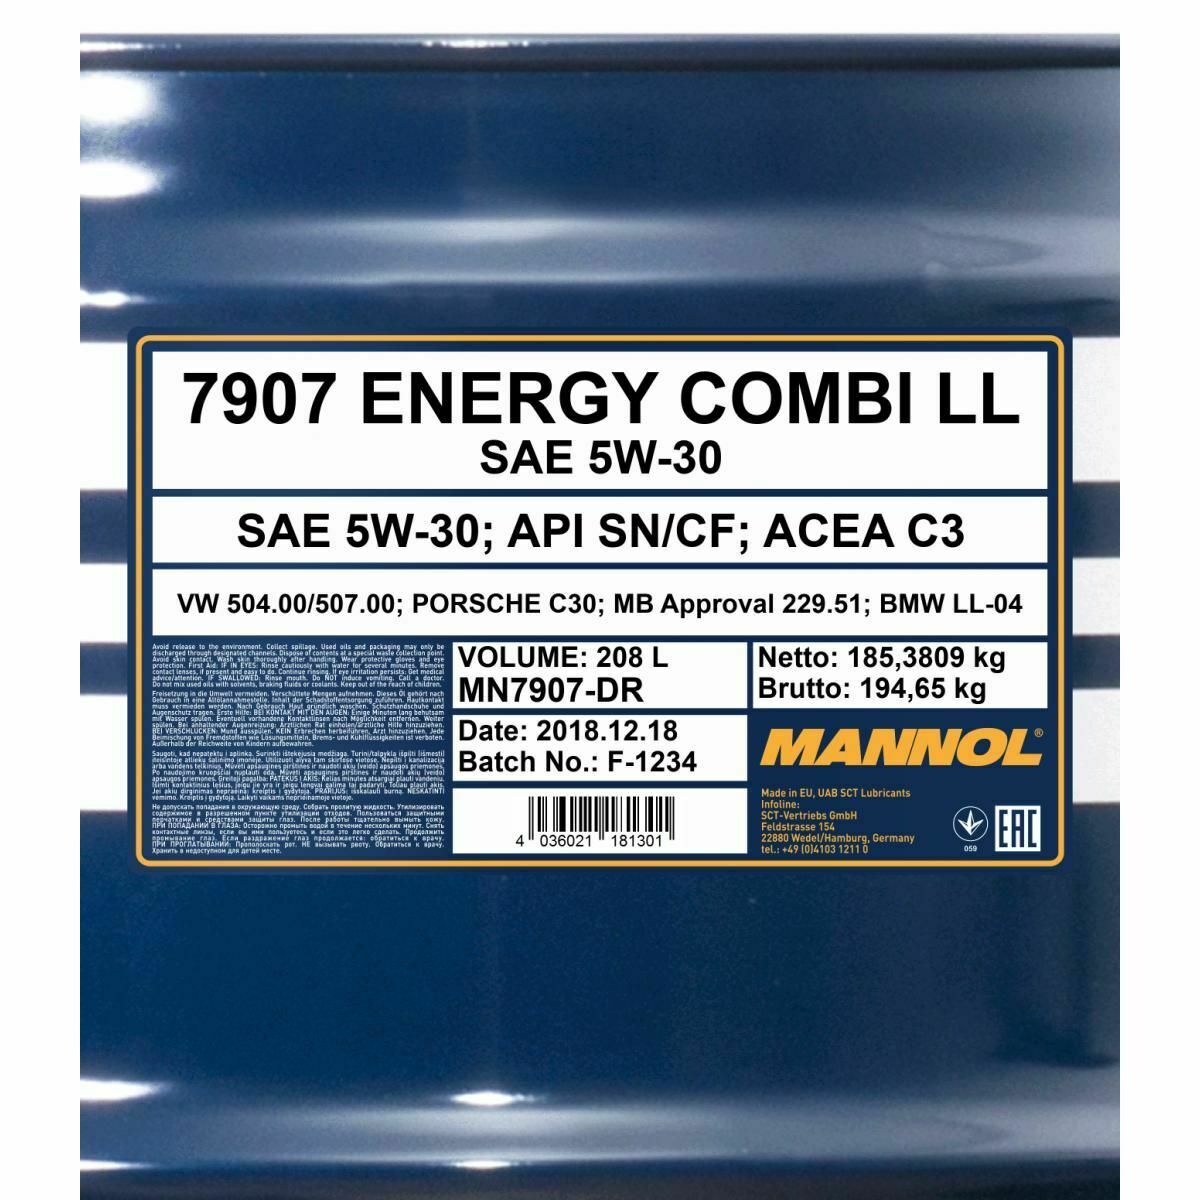 208 Liter MANNOL Energy Combi LL 5W-30 API SN Motoröl 5W30 4036021401300